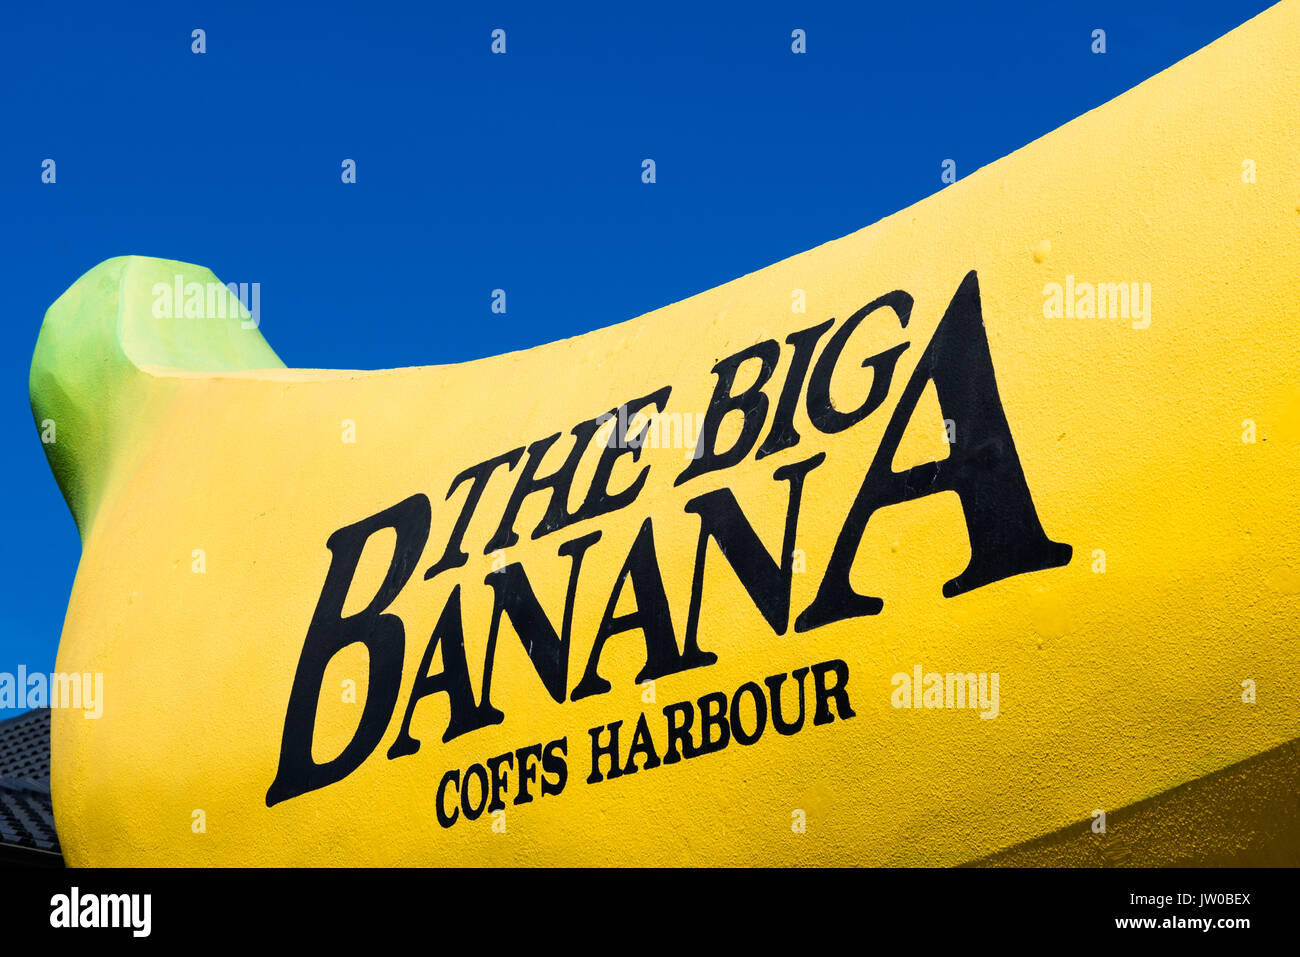 The Big Banana Coffs Harbour New South Wales Australia. Stock Photo